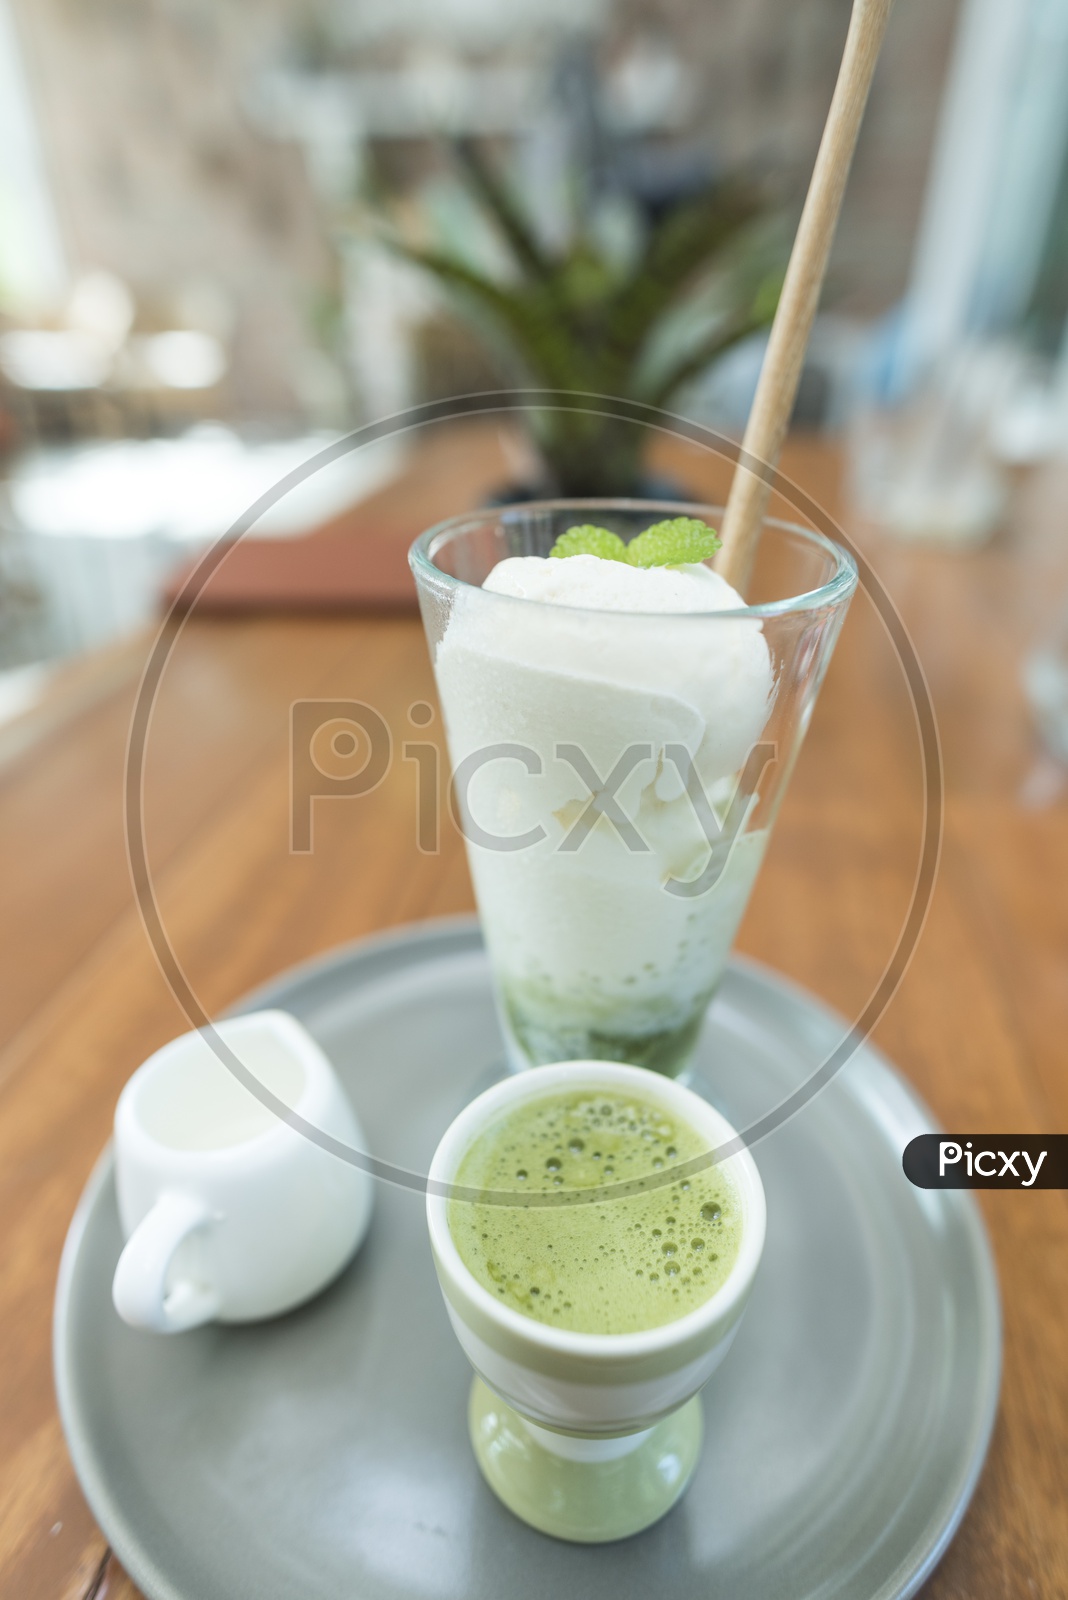 green tea with ice-cream